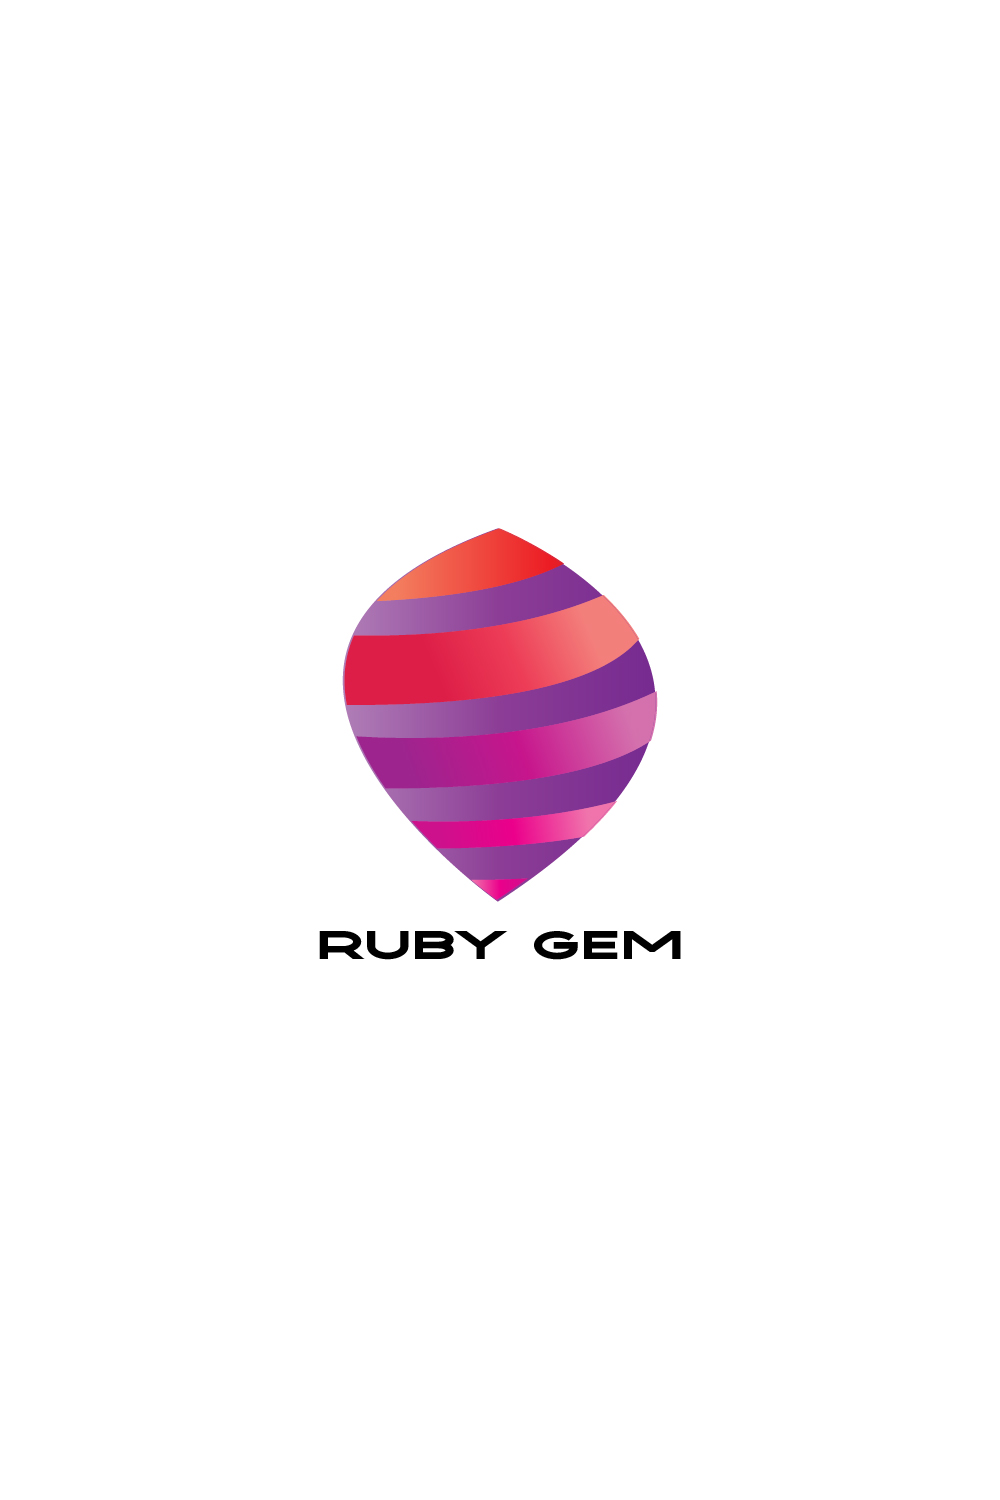 RUBY GEM pinterest preview image.